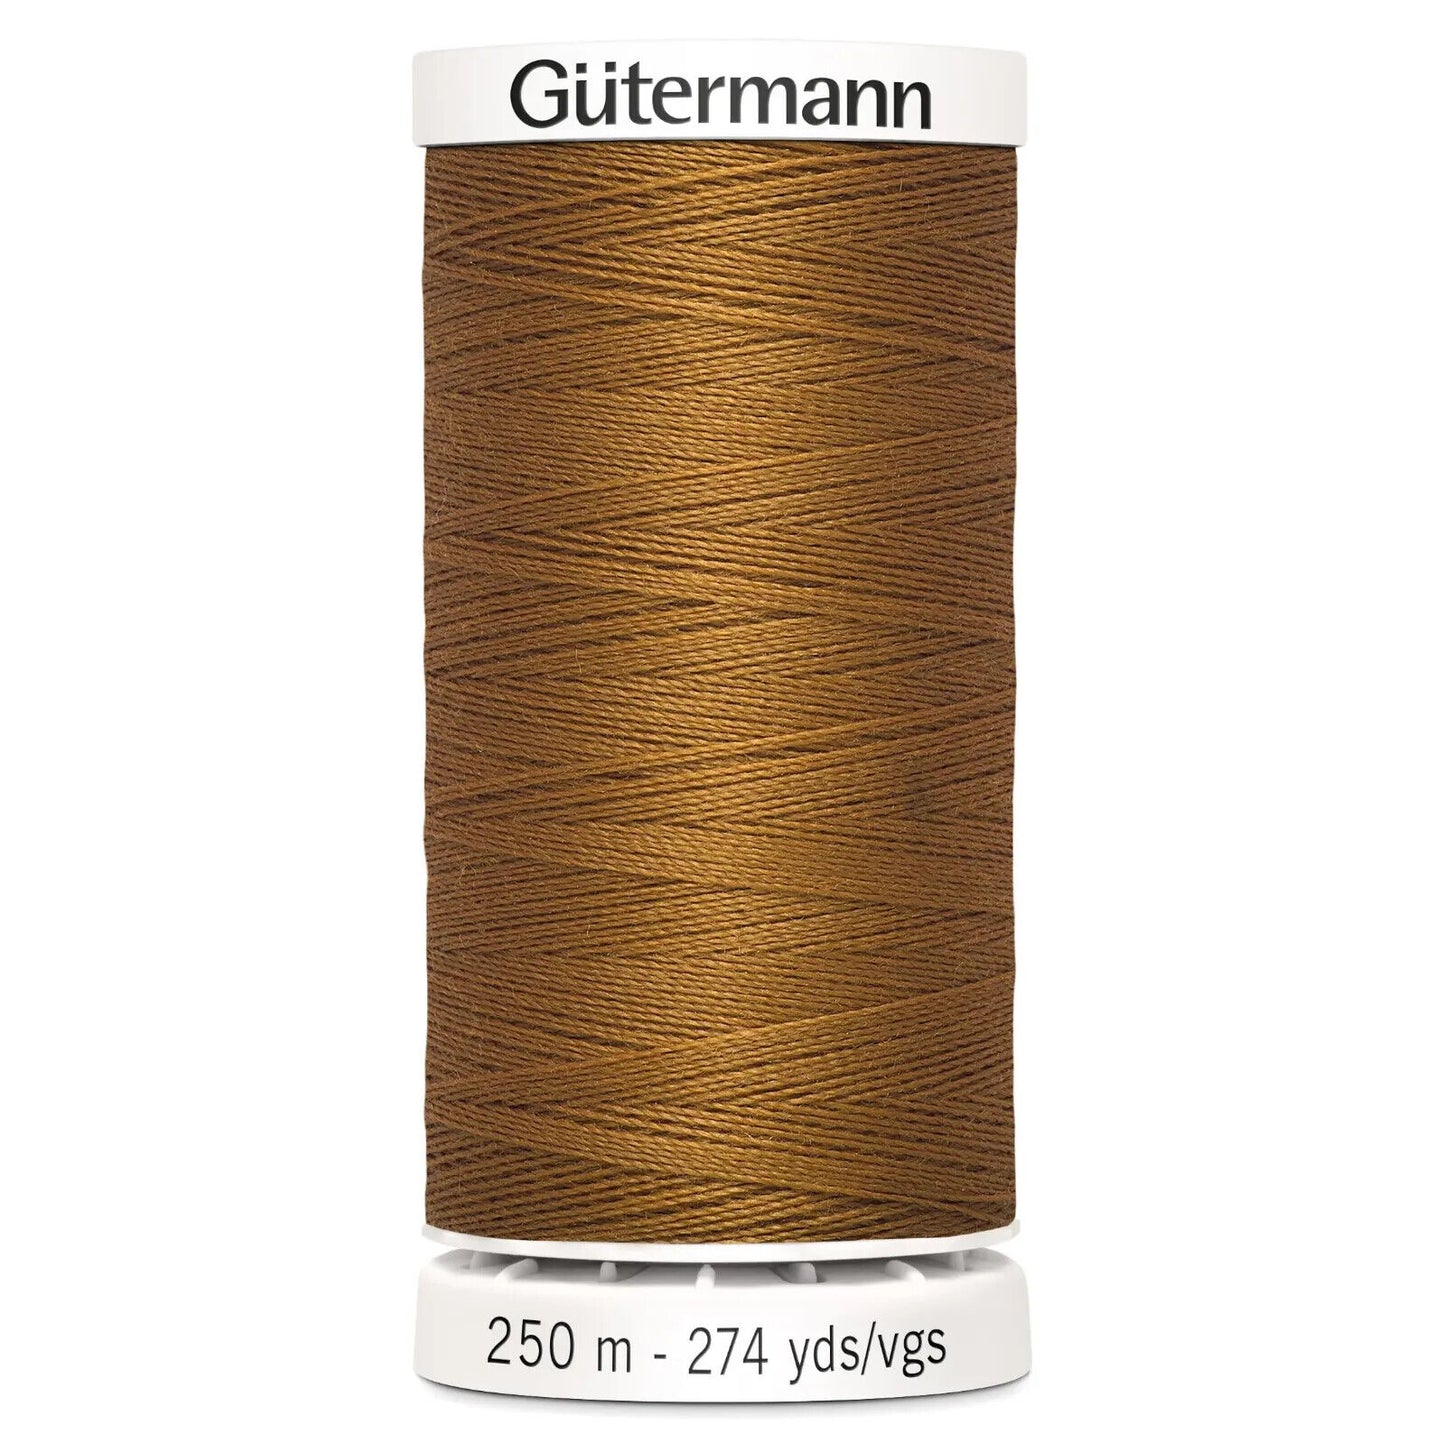 448 Gutermann Sew All 250m - Toffee